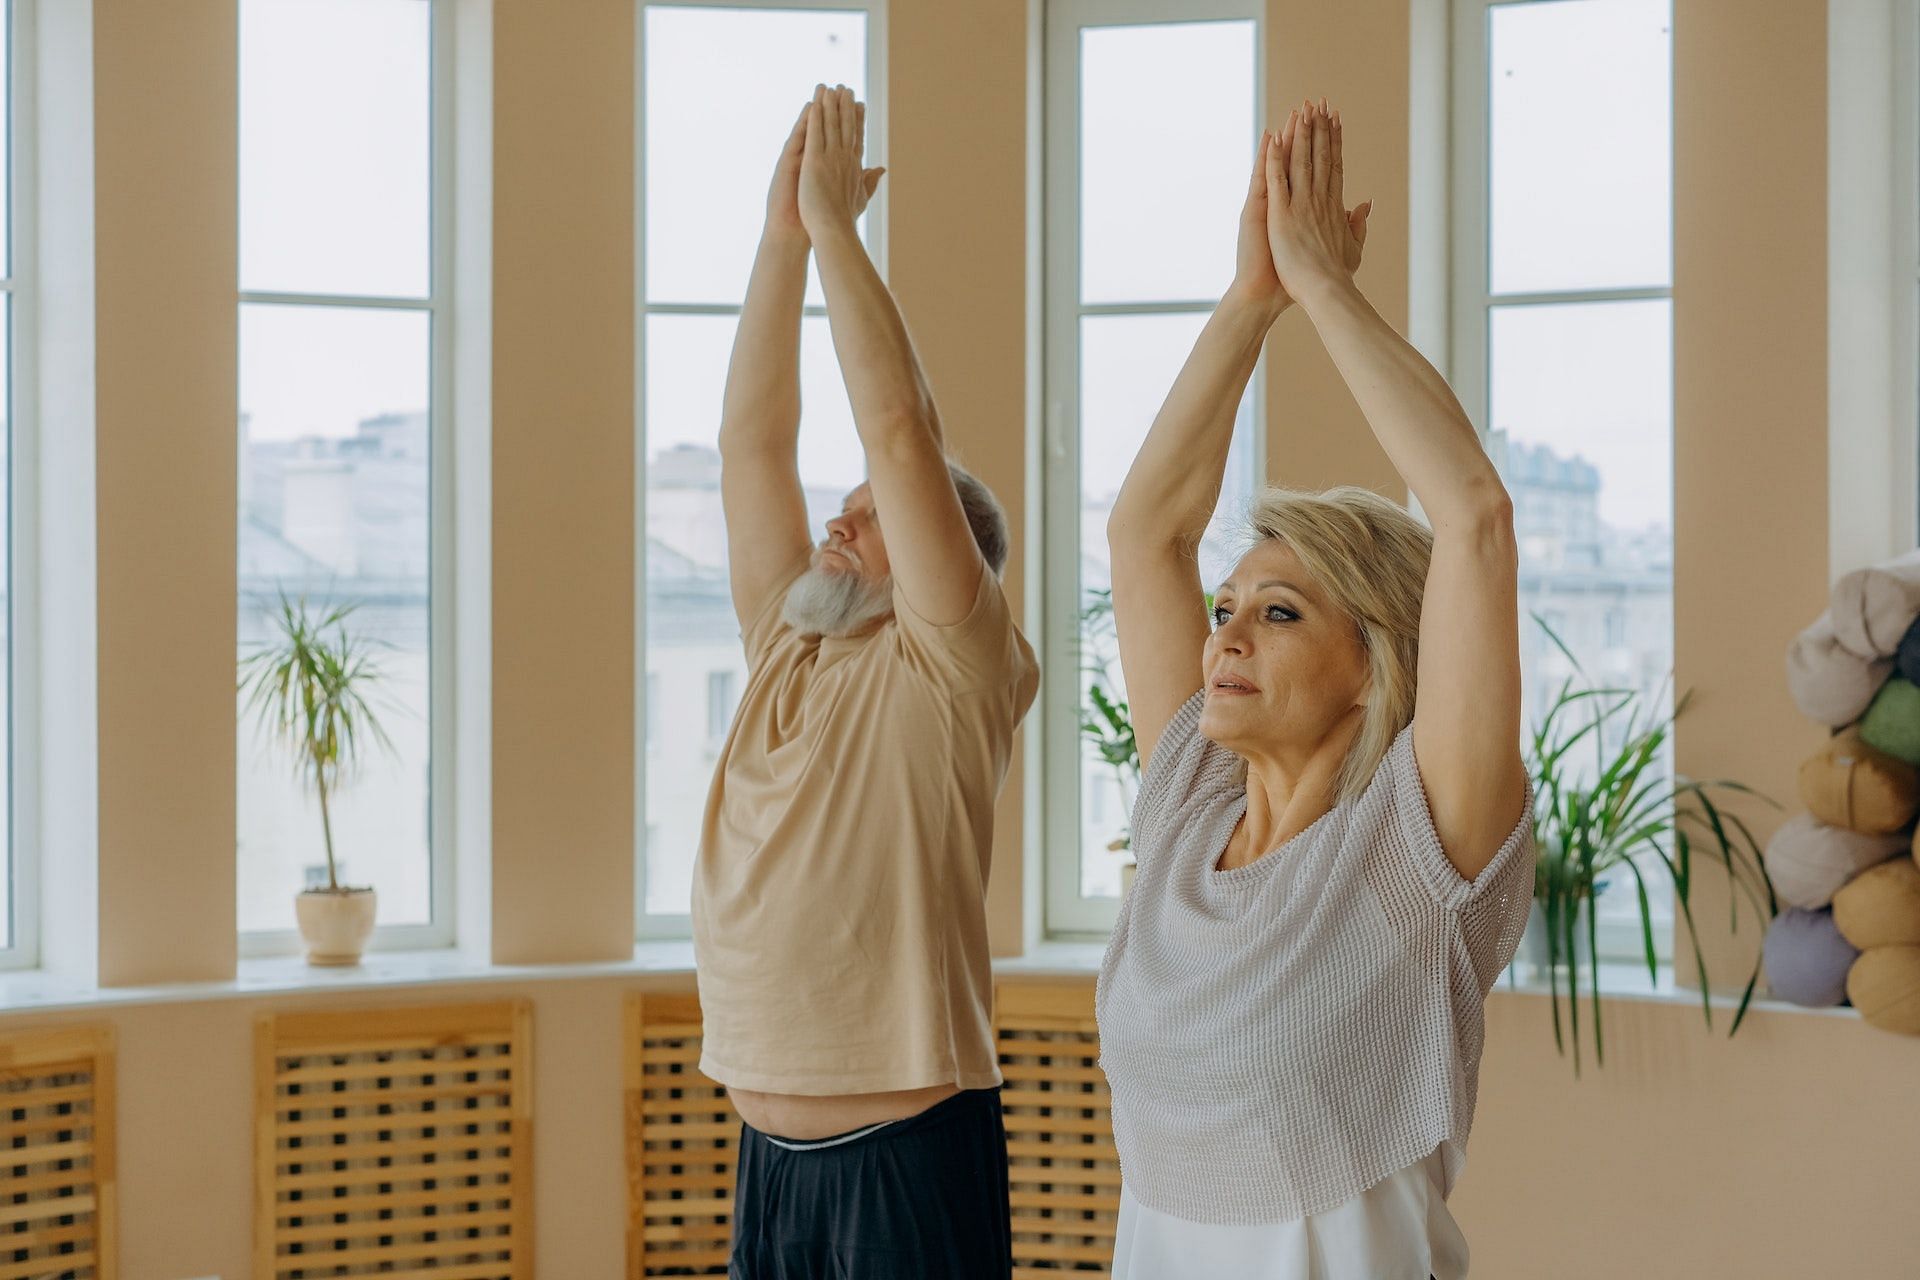 Balance exercises for seniors improve their self-confidence. (Photo via Pexels/Mikhail Nilov)